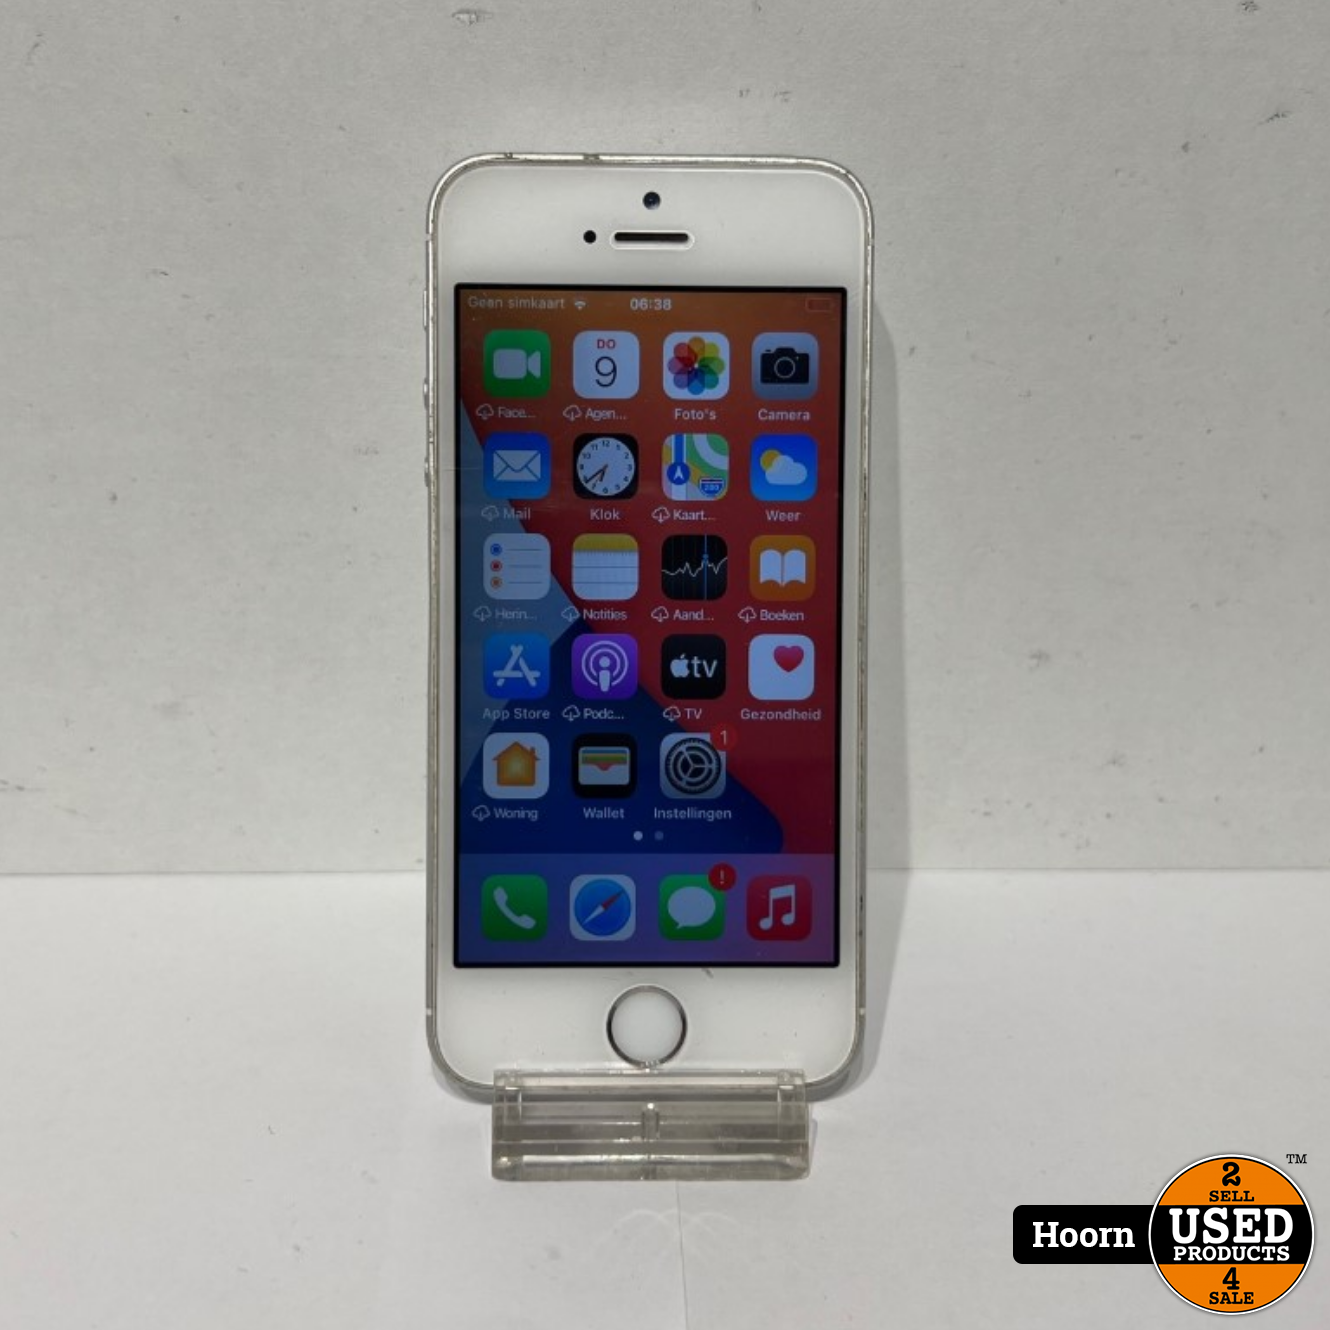 Apple iPhone iPhone SE 32GB Silver Los Toestel 82% - Used Products Hoorn